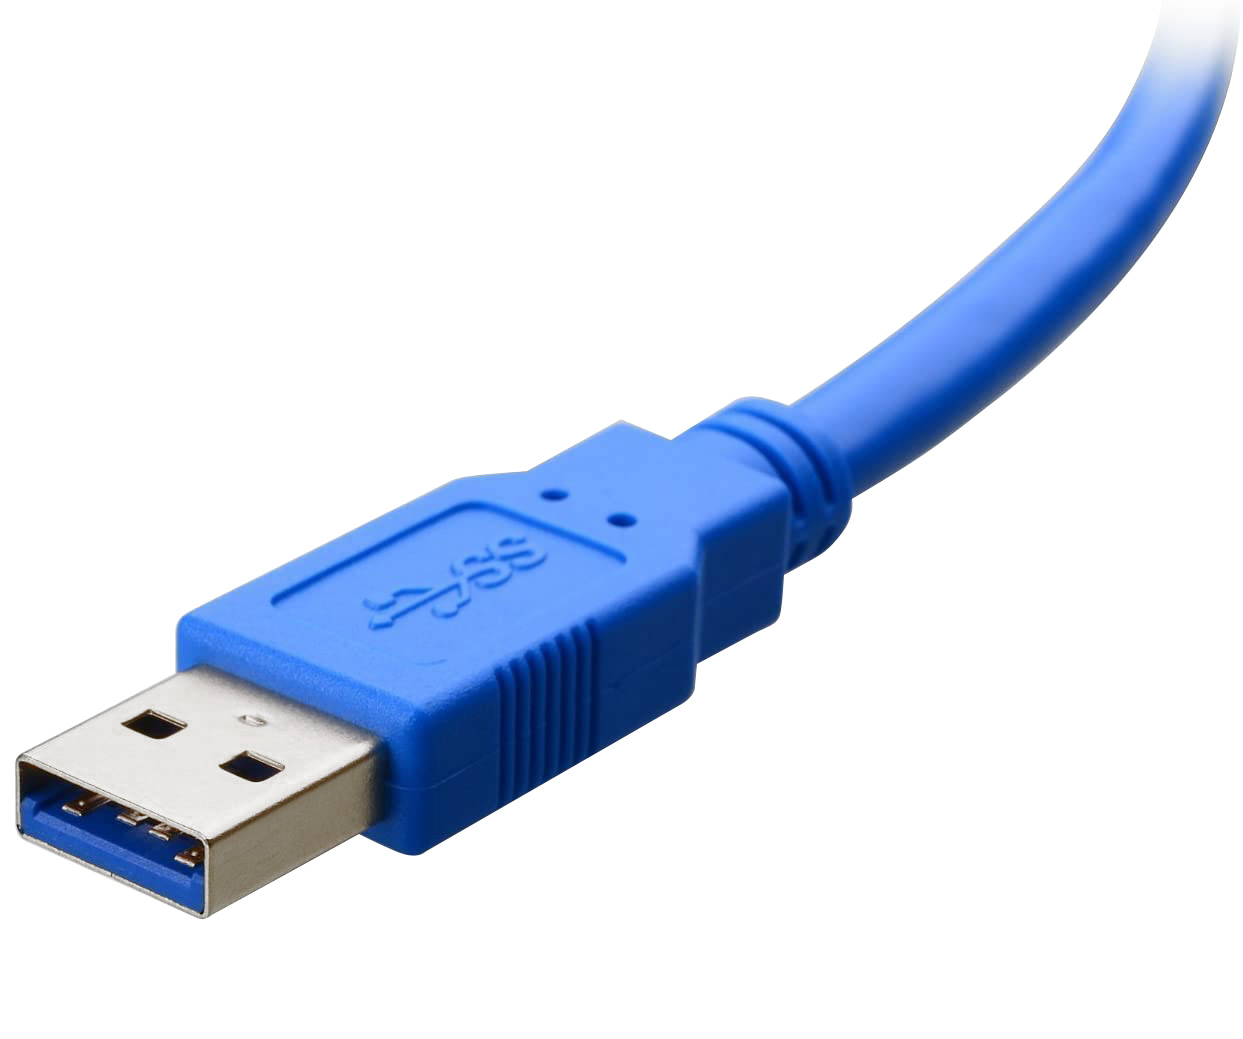 USB 3.0 PROLUNGA A-Spina Jack a Cavo Dati Highspeed BLU 5m 